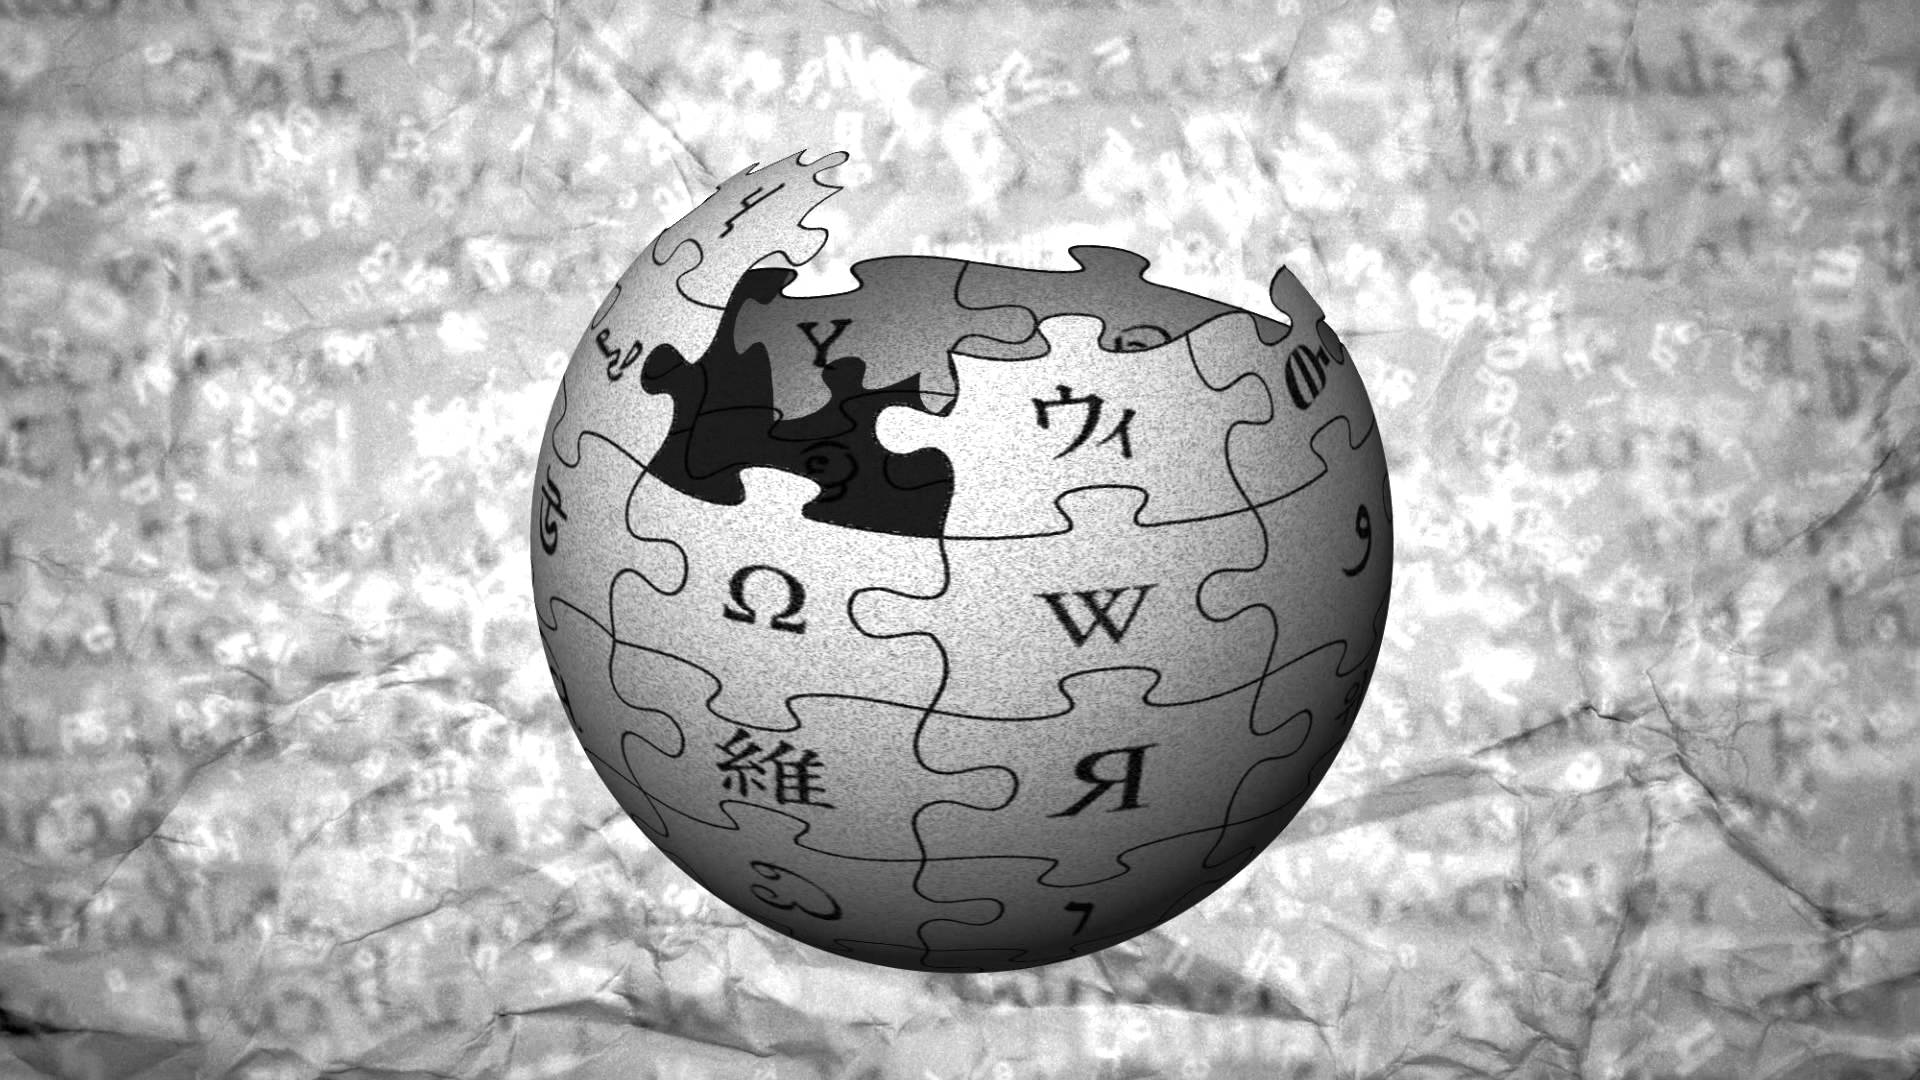 WorldWide Wikipedia